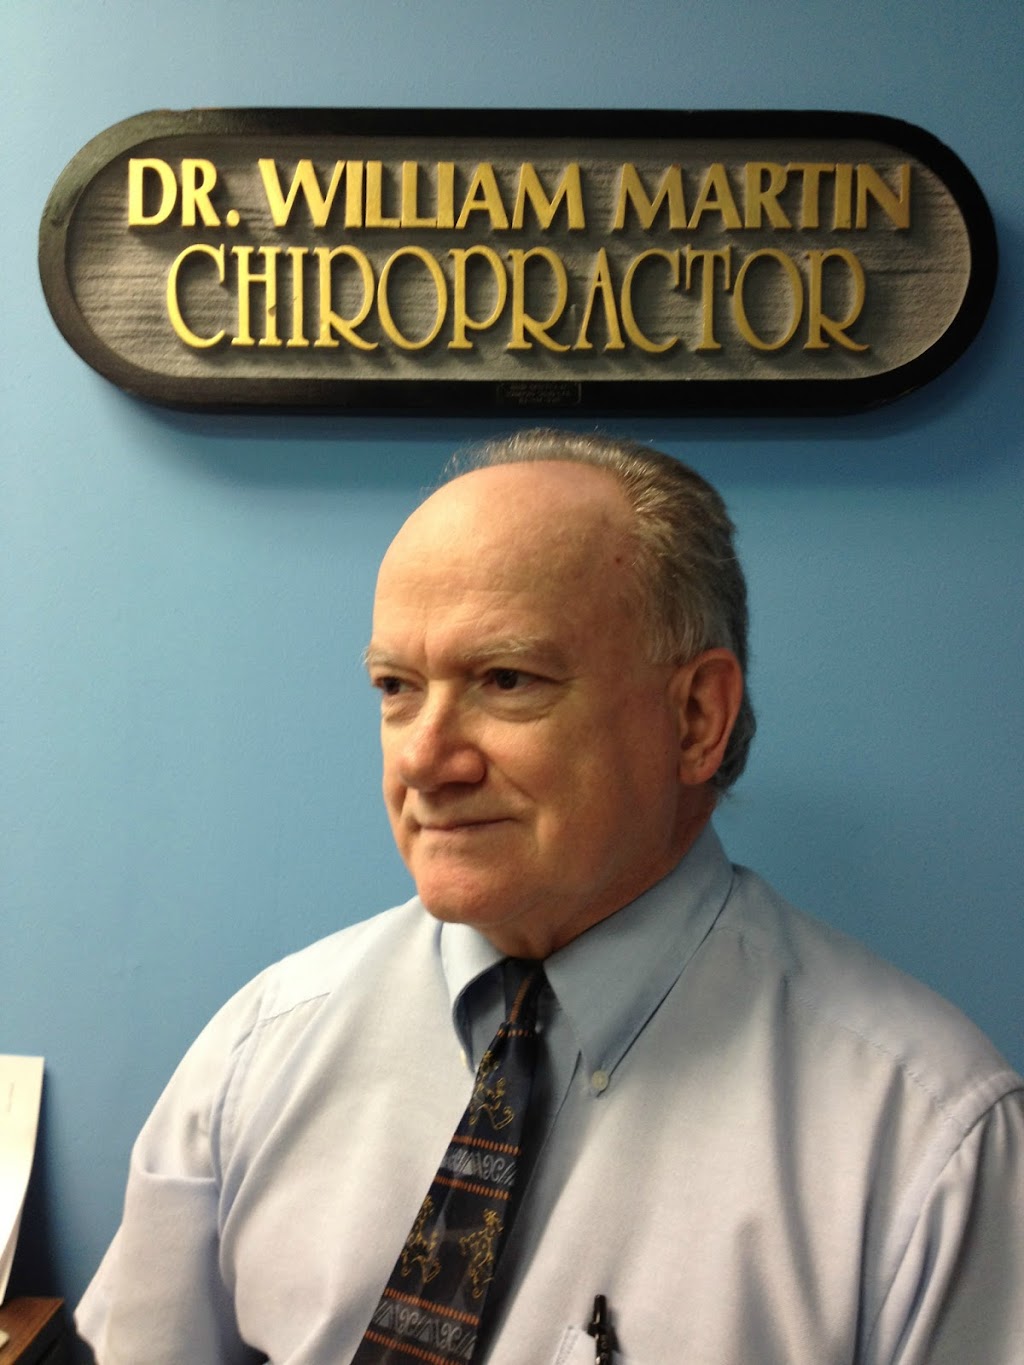 Dr. William O. Martin, D.C. | 141 South Ave #3, Fanwood, NJ 07023 | Phone: (908) 322-7400